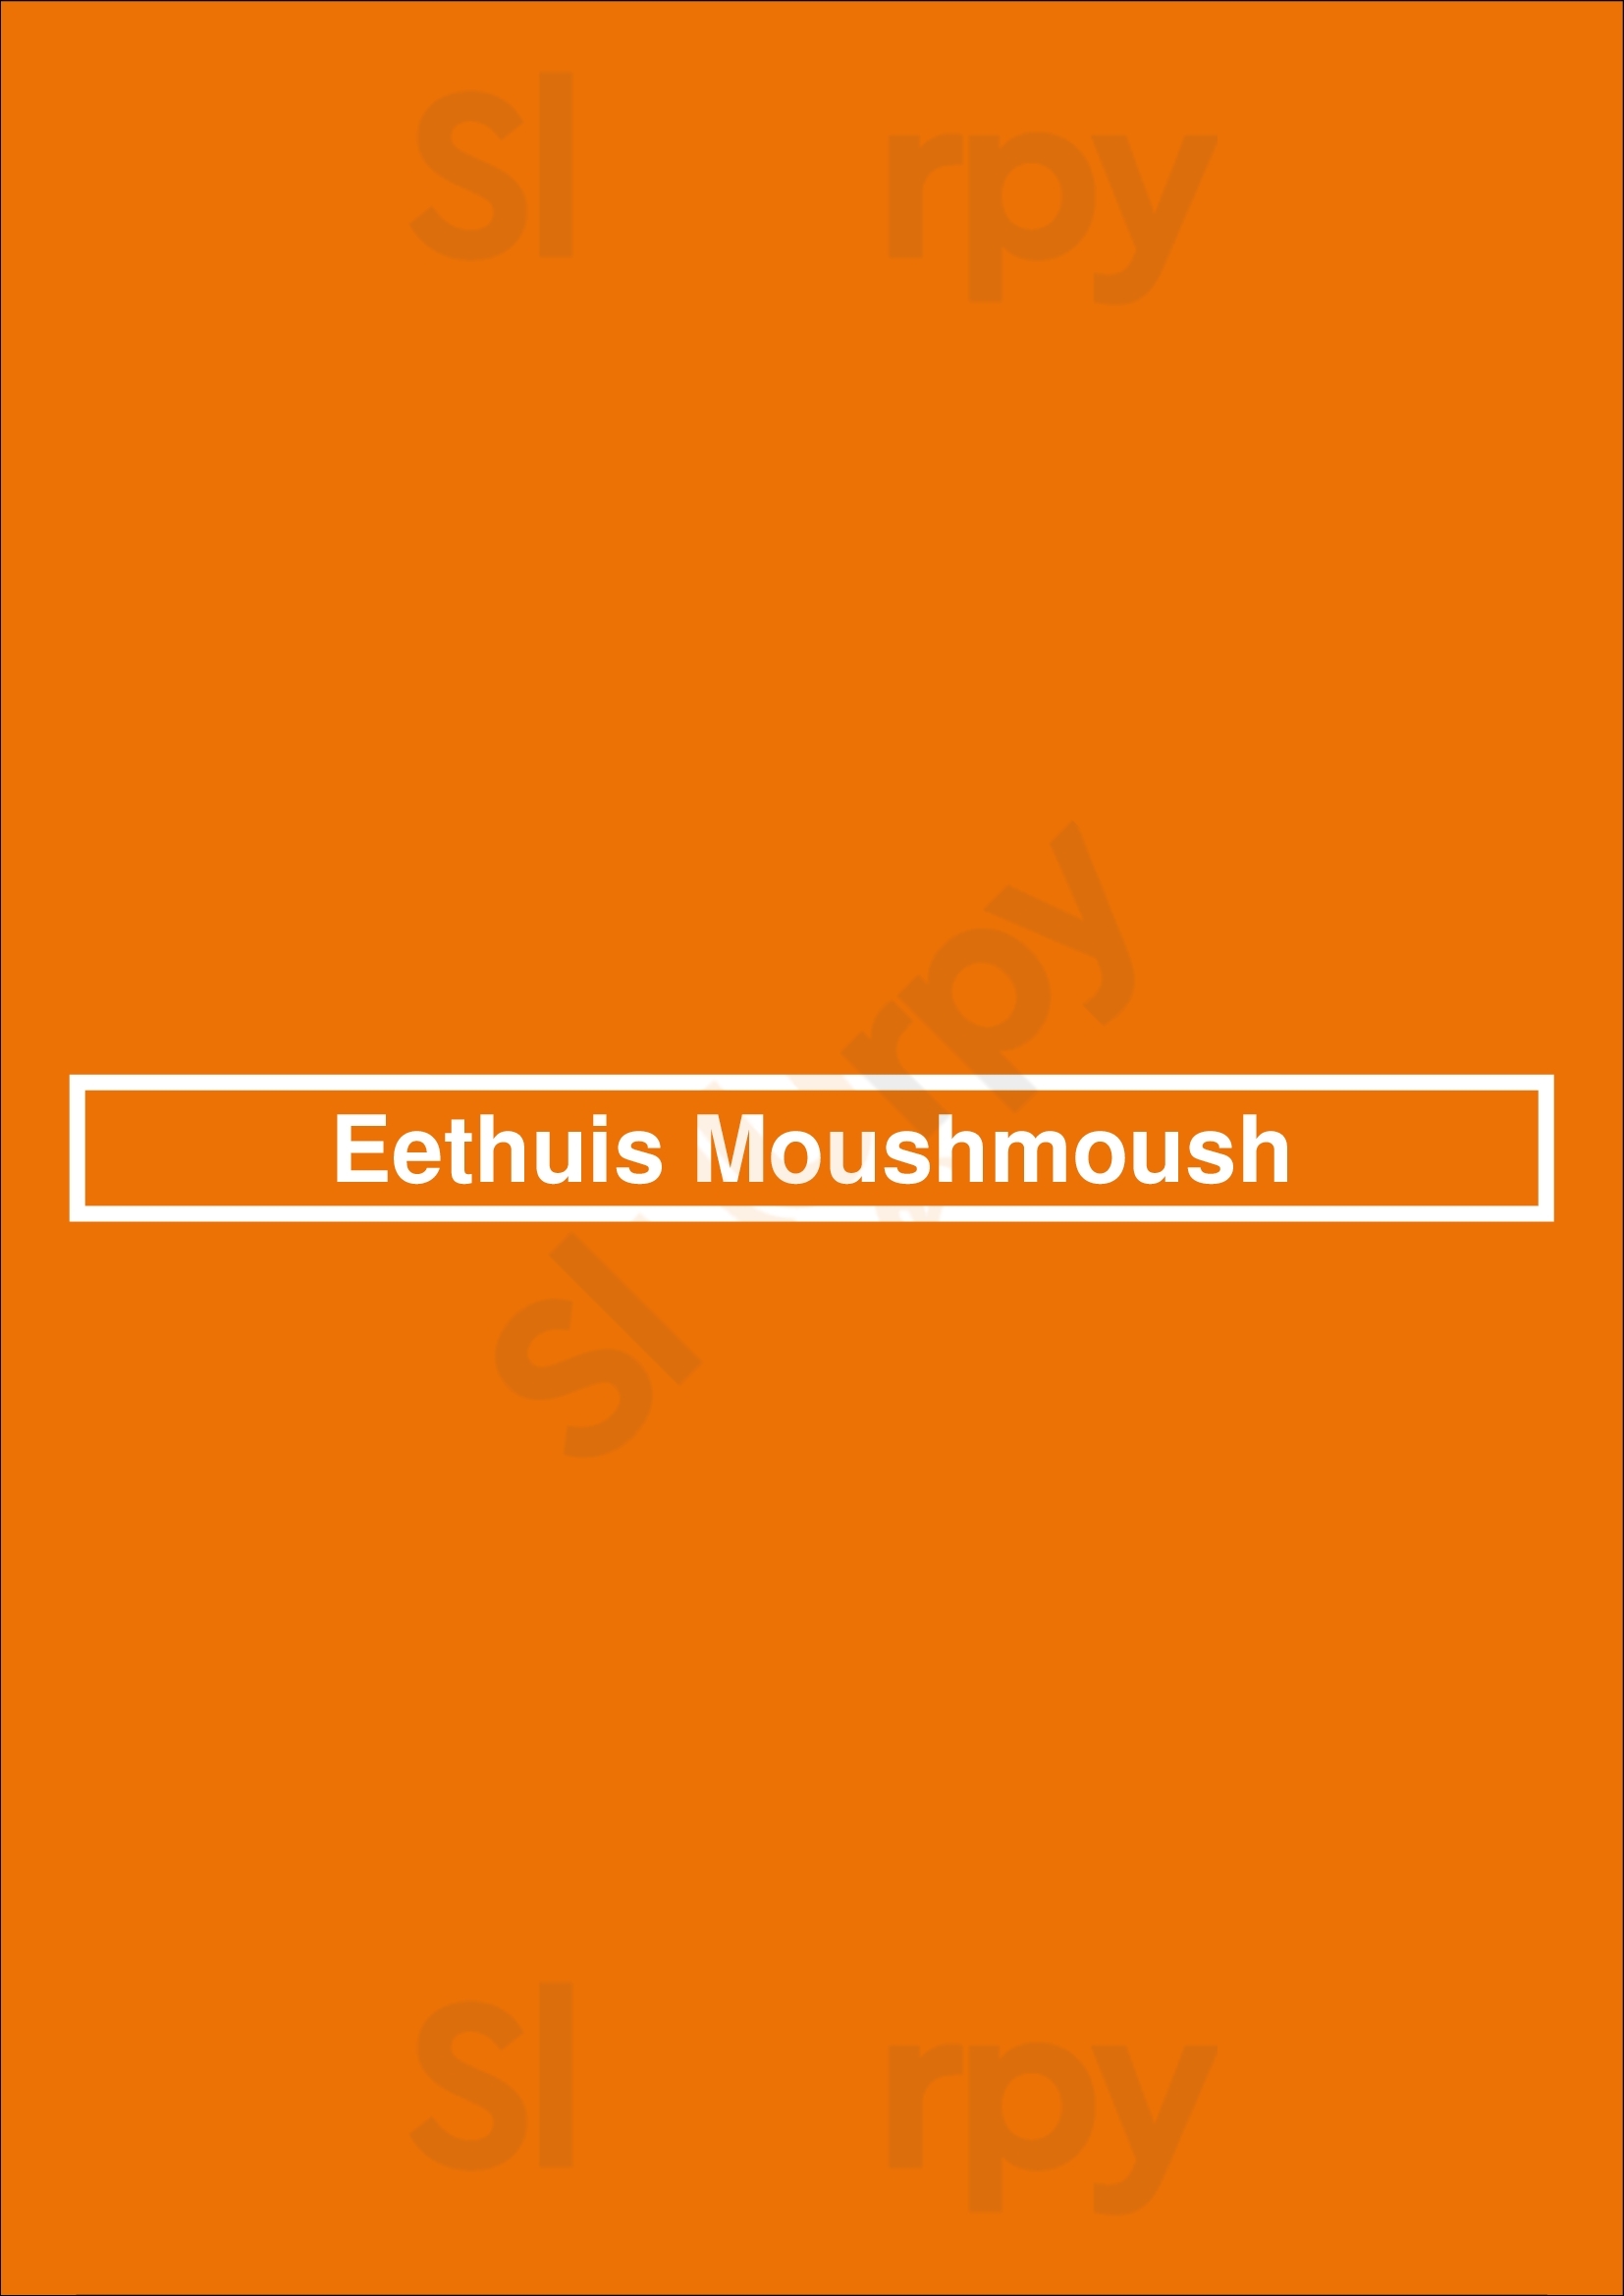 Eethuis Moushmoush Arnhem Menu - 1